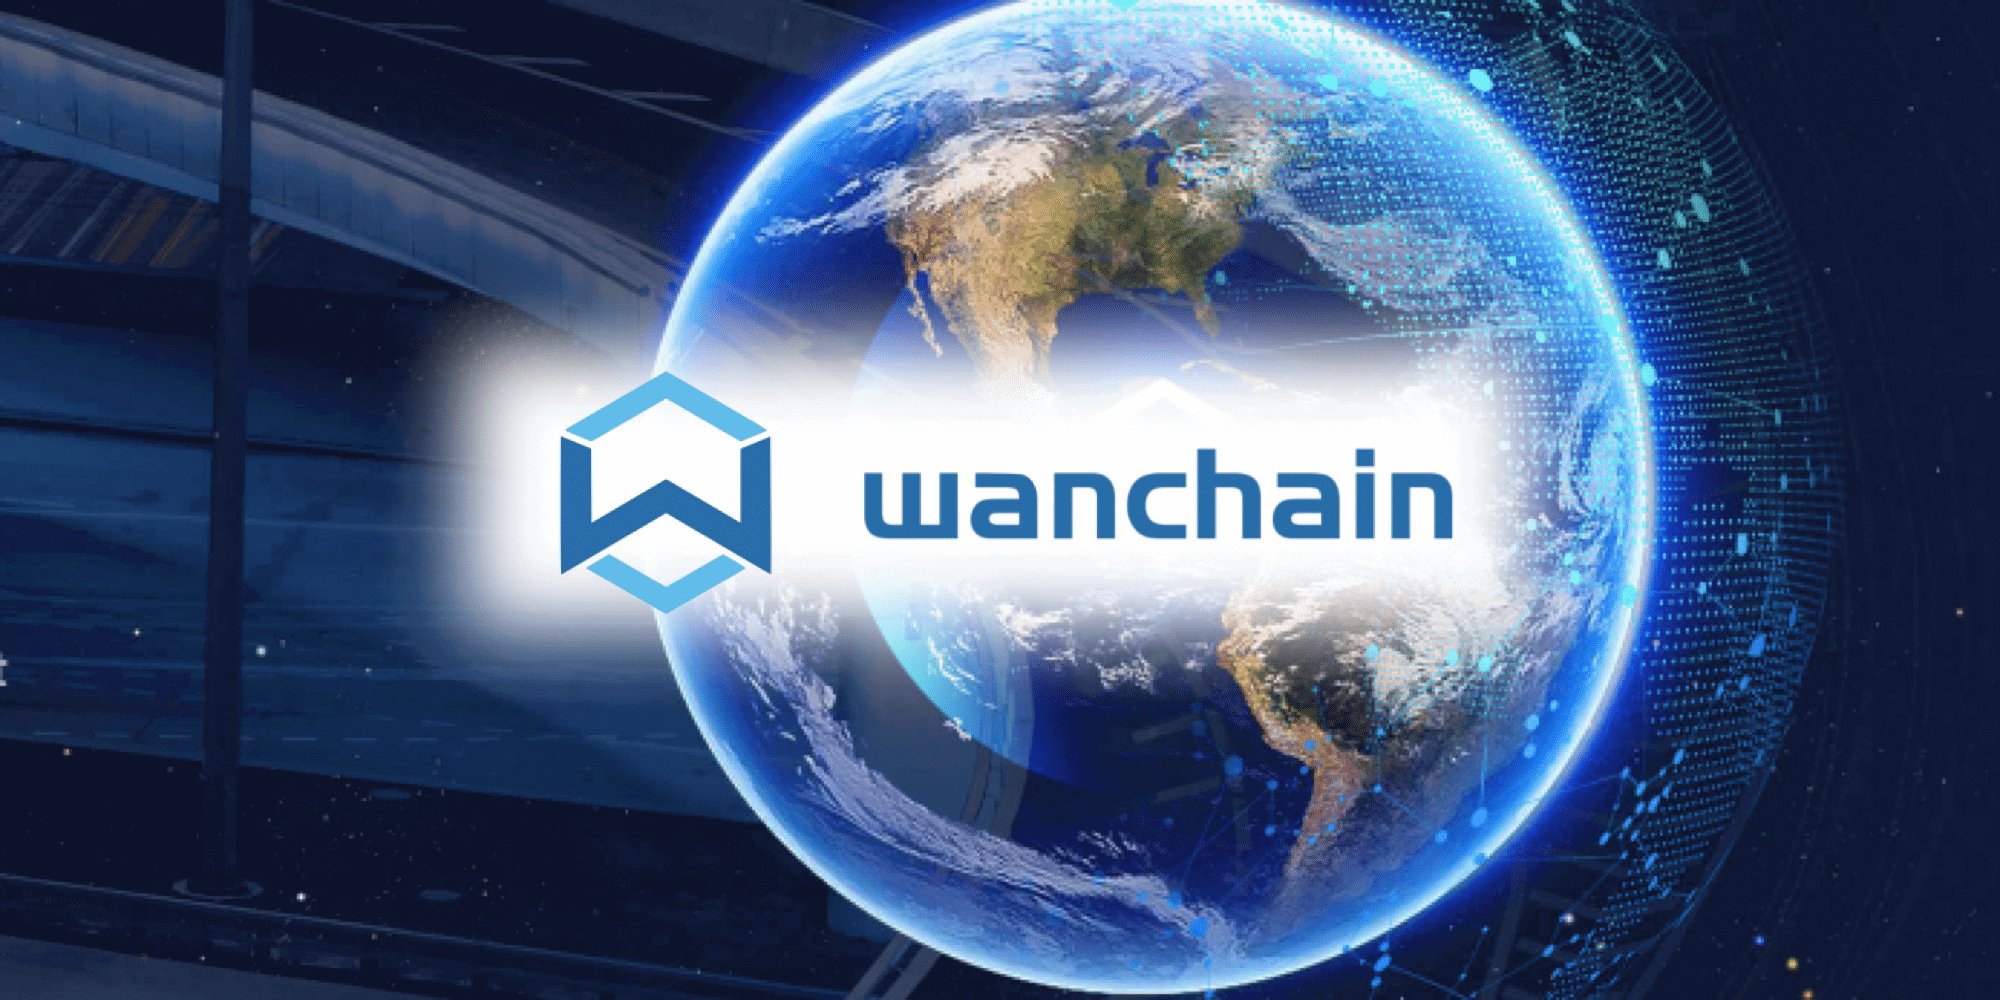 Wanchain - Gets listed on Binance; Buy Wanchain on Binance